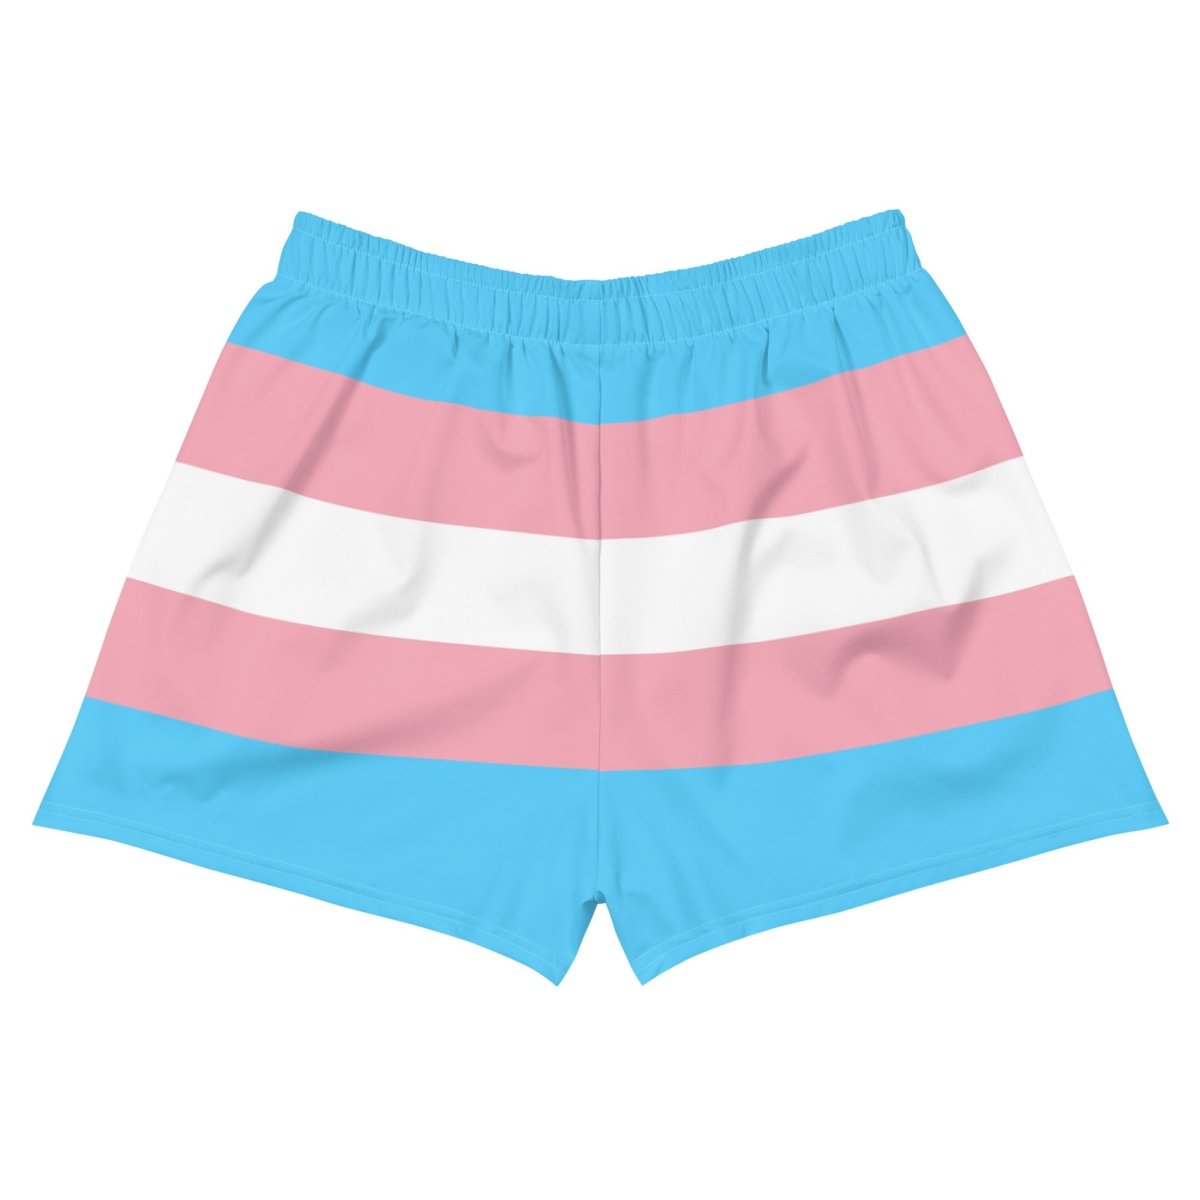 Transgender Flag Athletic Shorts - On Trend Shirts